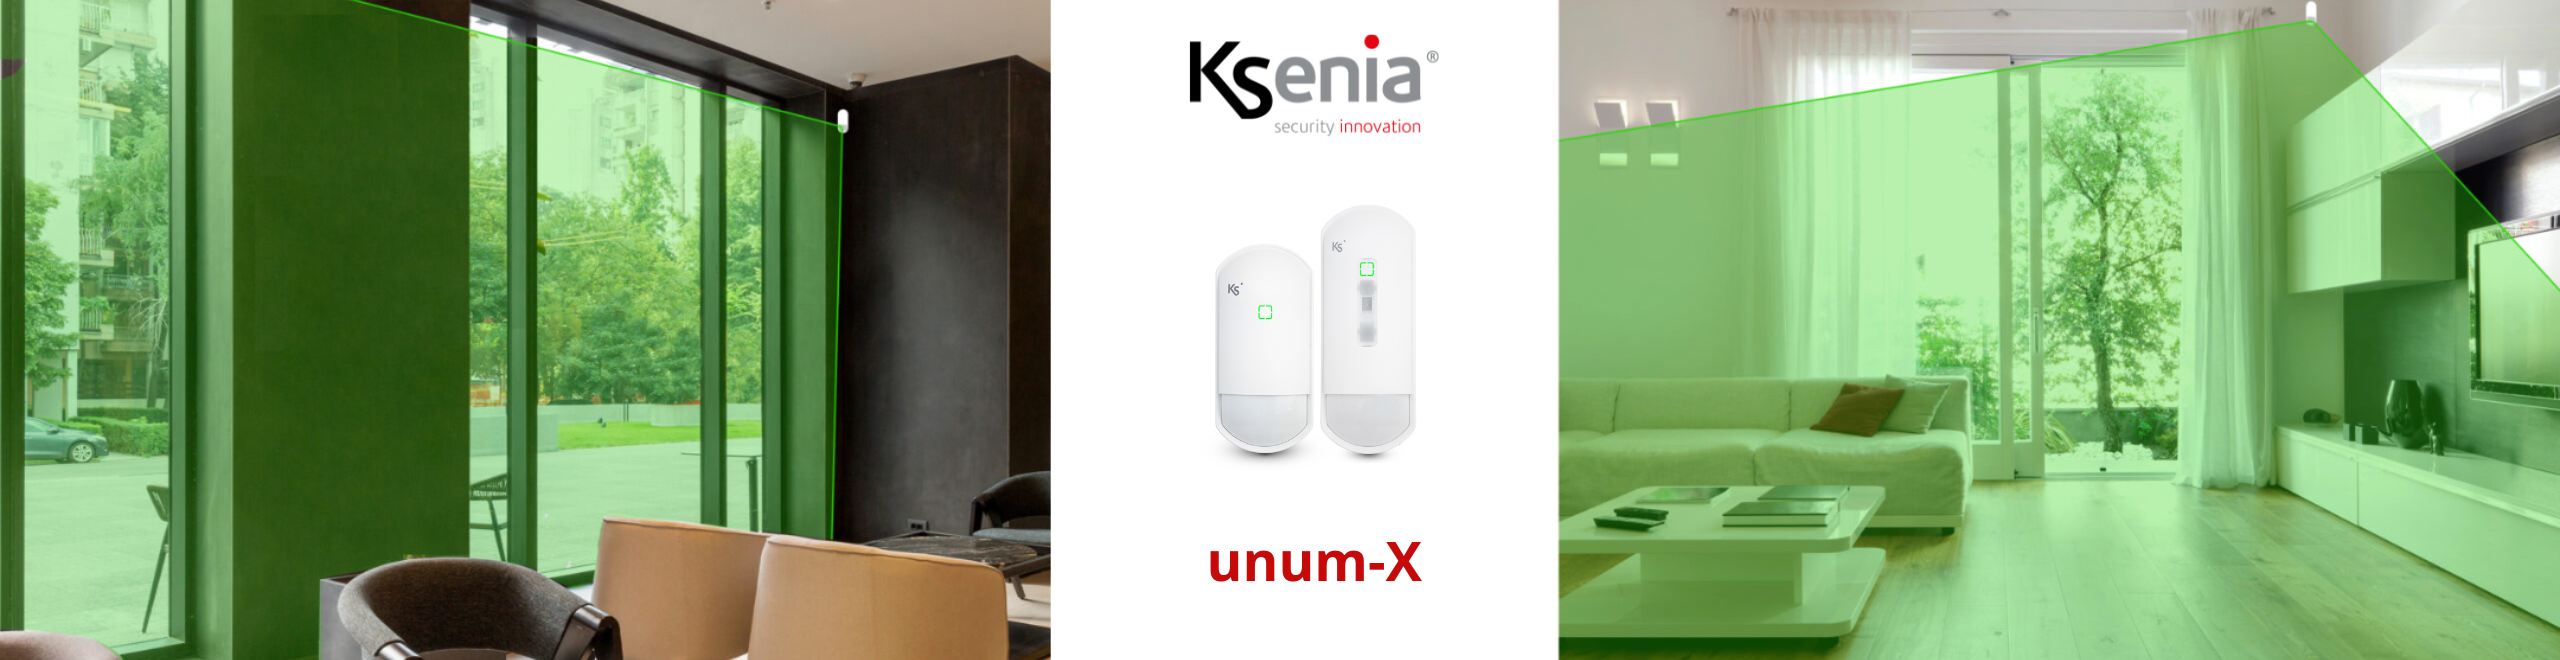 unum-X sensors Ksenia Security